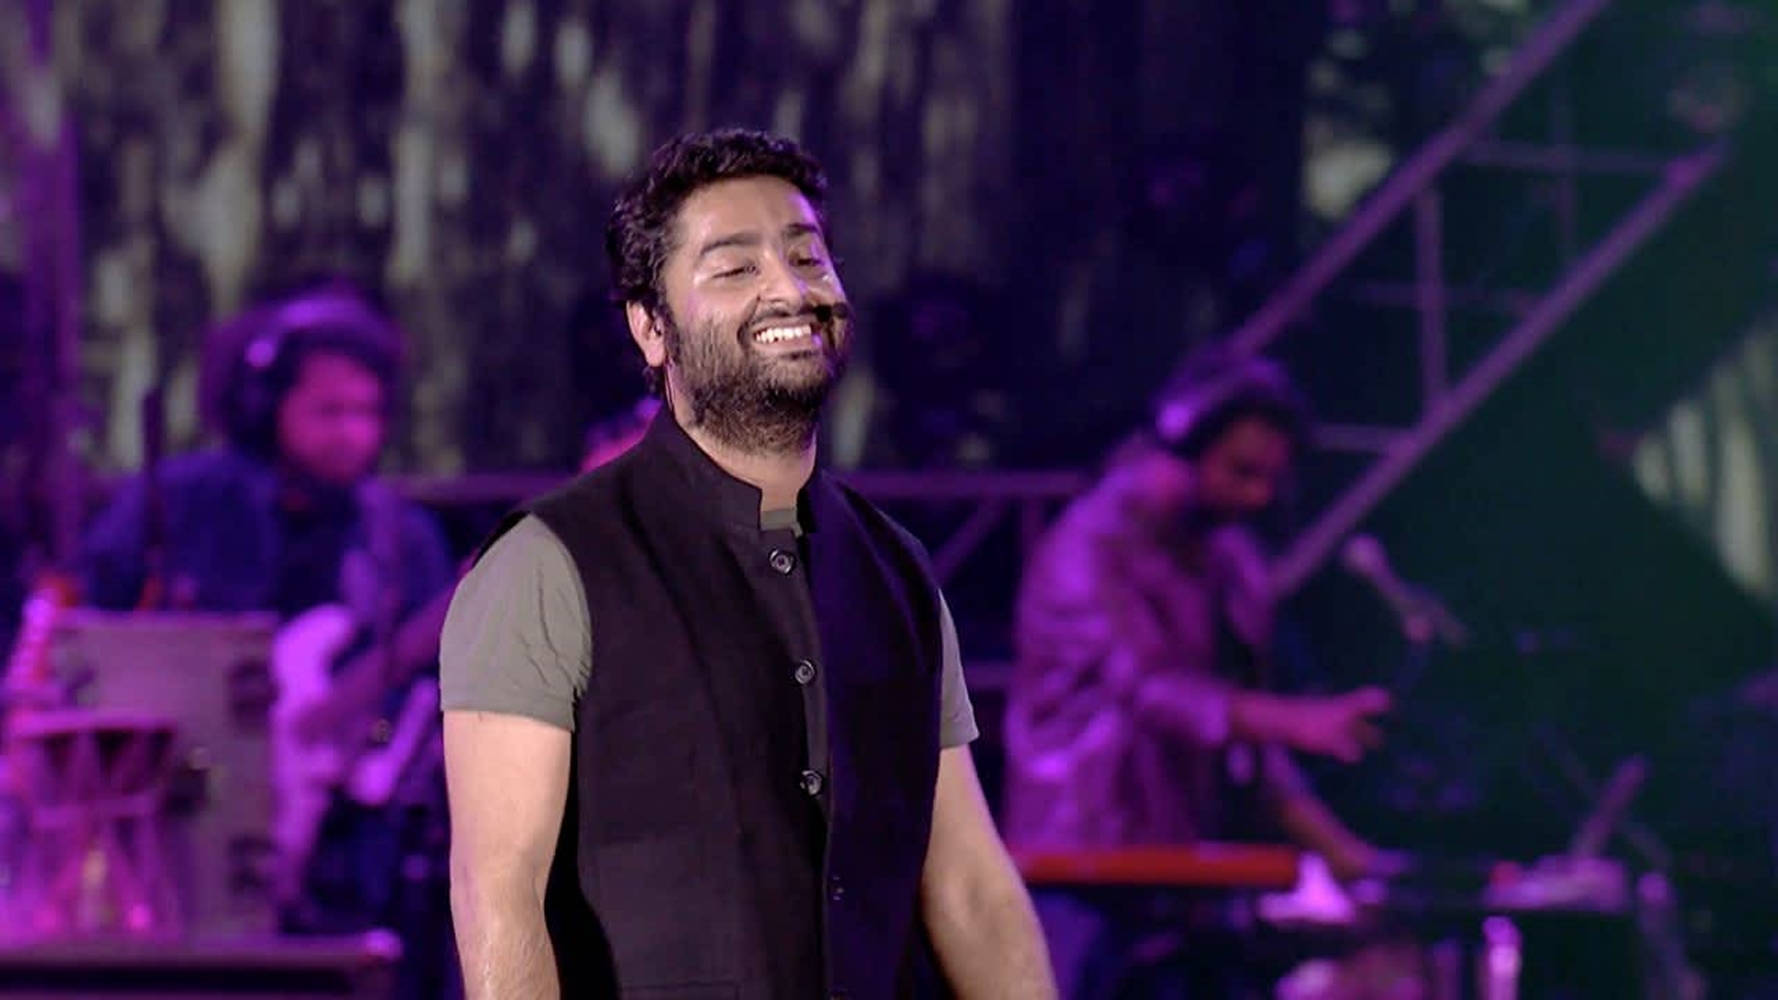 Indian Singer Arijit Singh Candid Smile Background